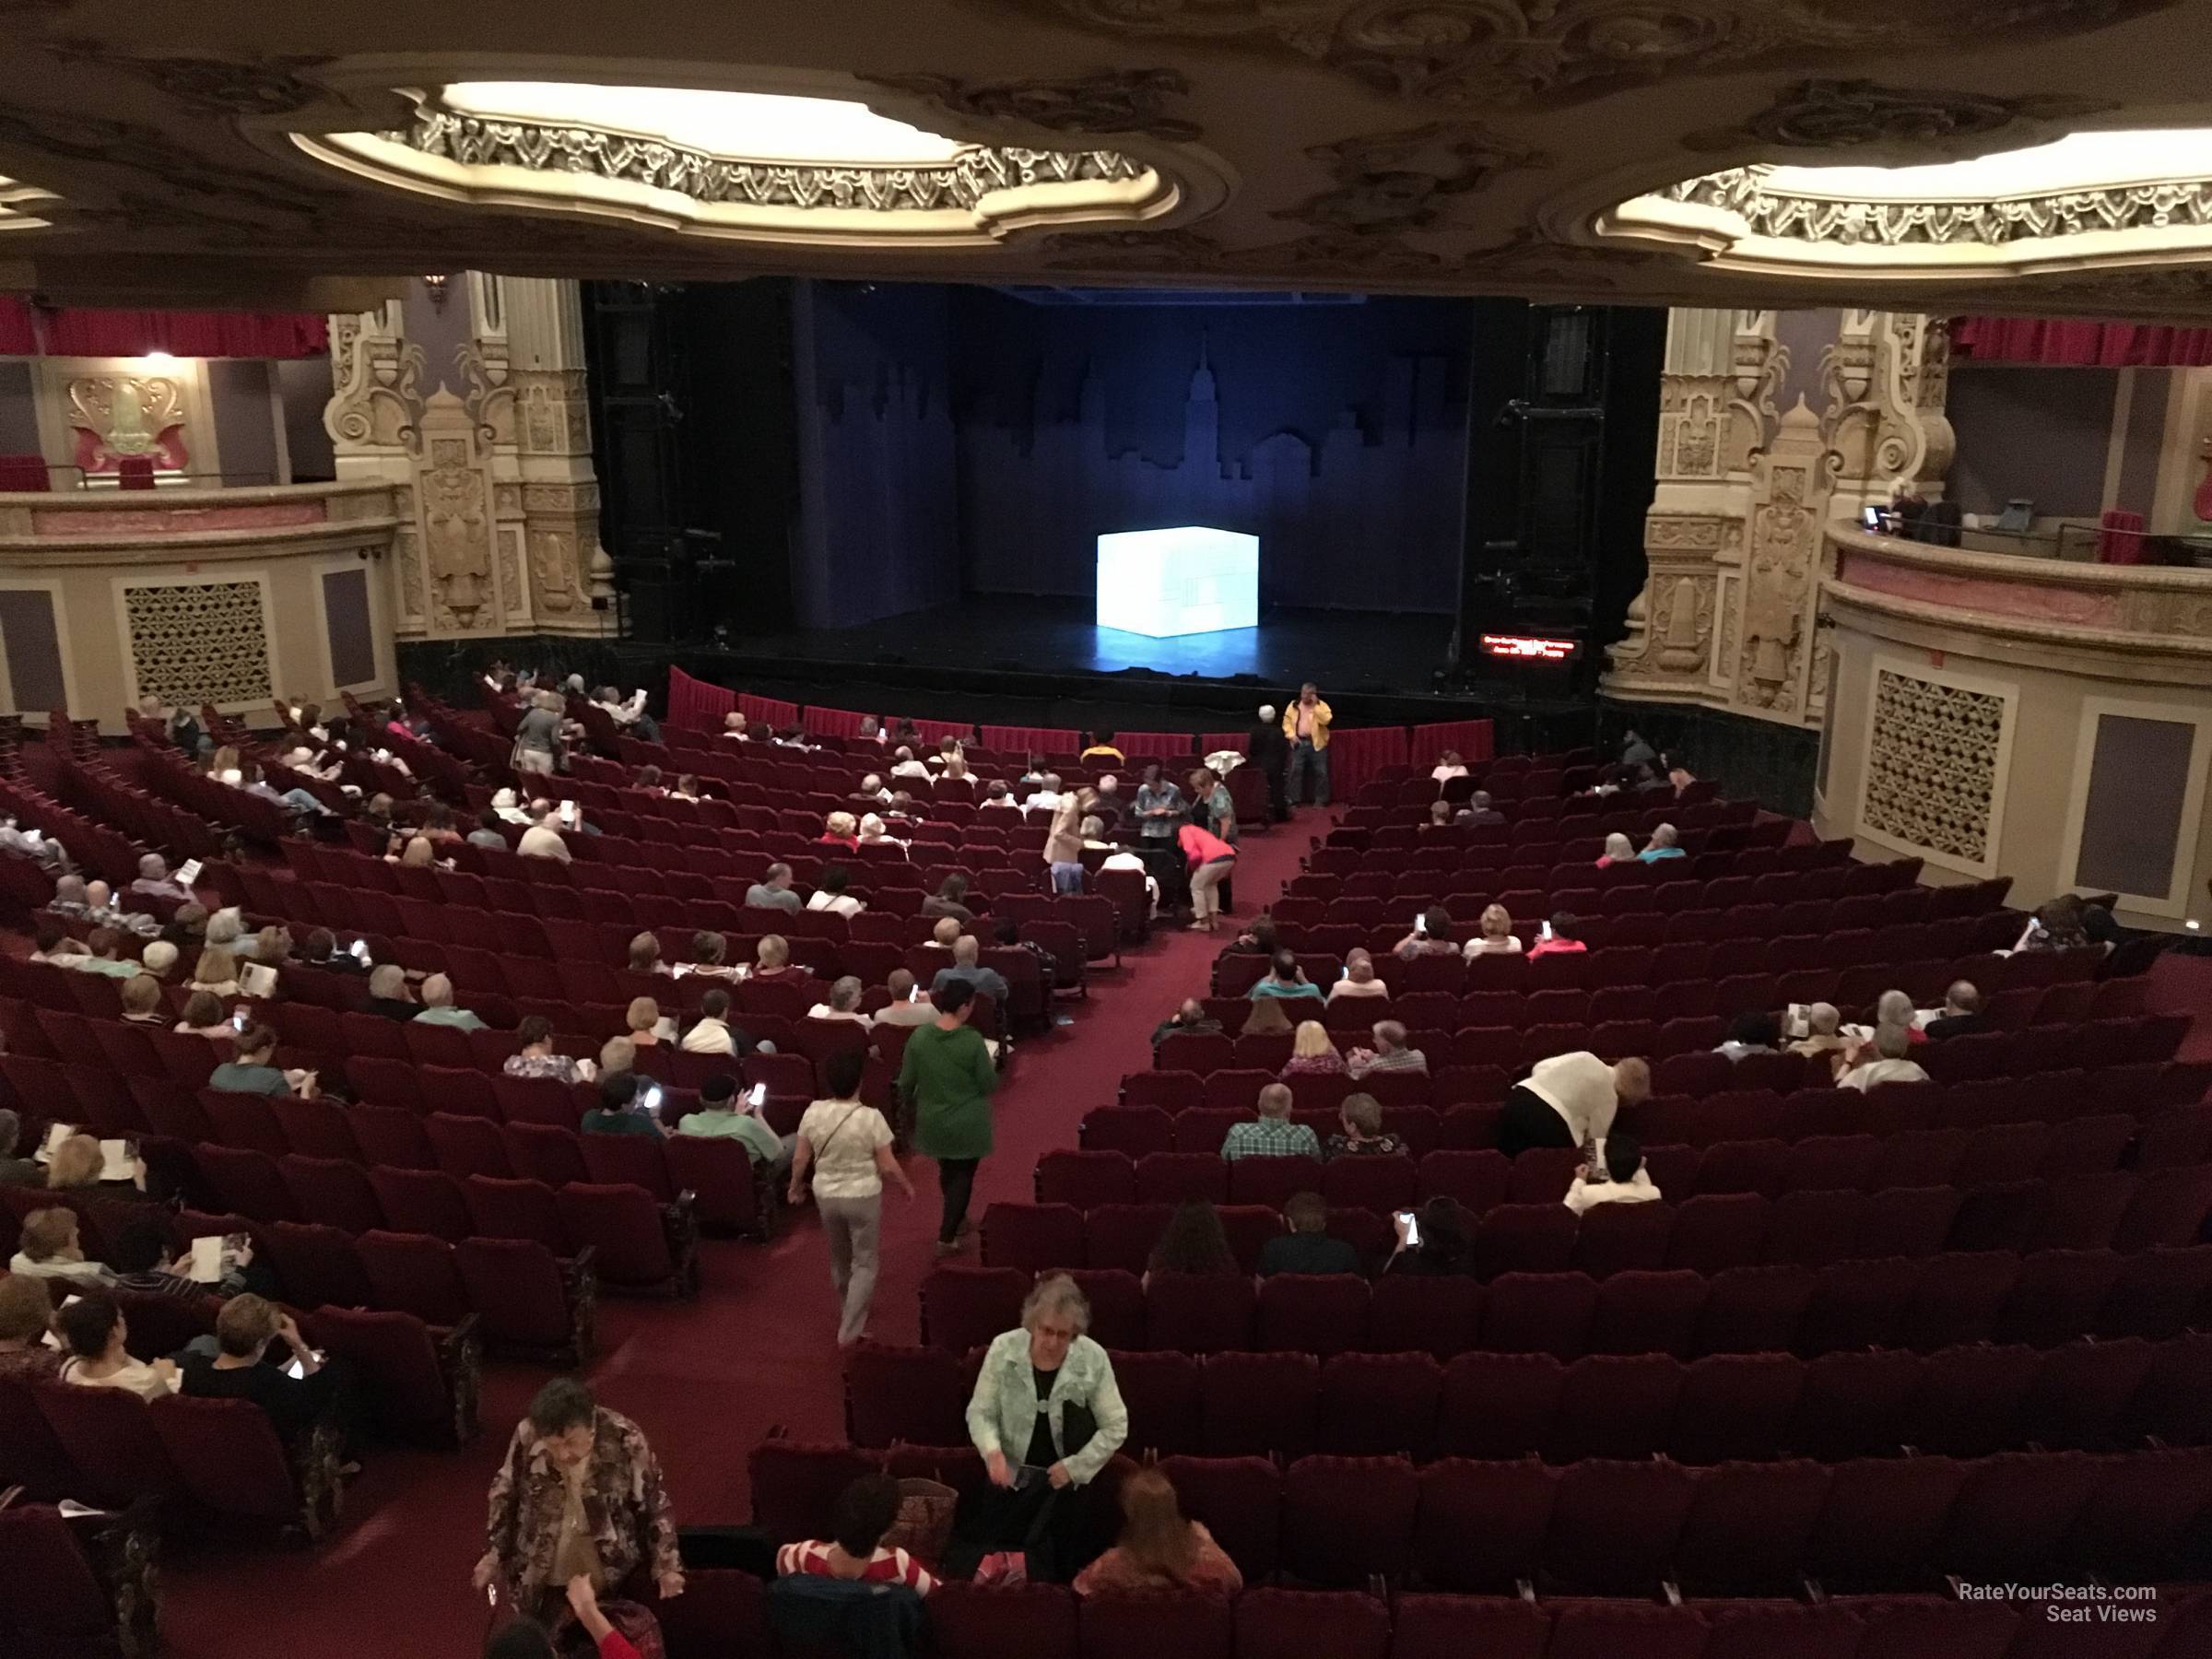 dress circle right center, row c seat view  - nederlander theatre (chicago)